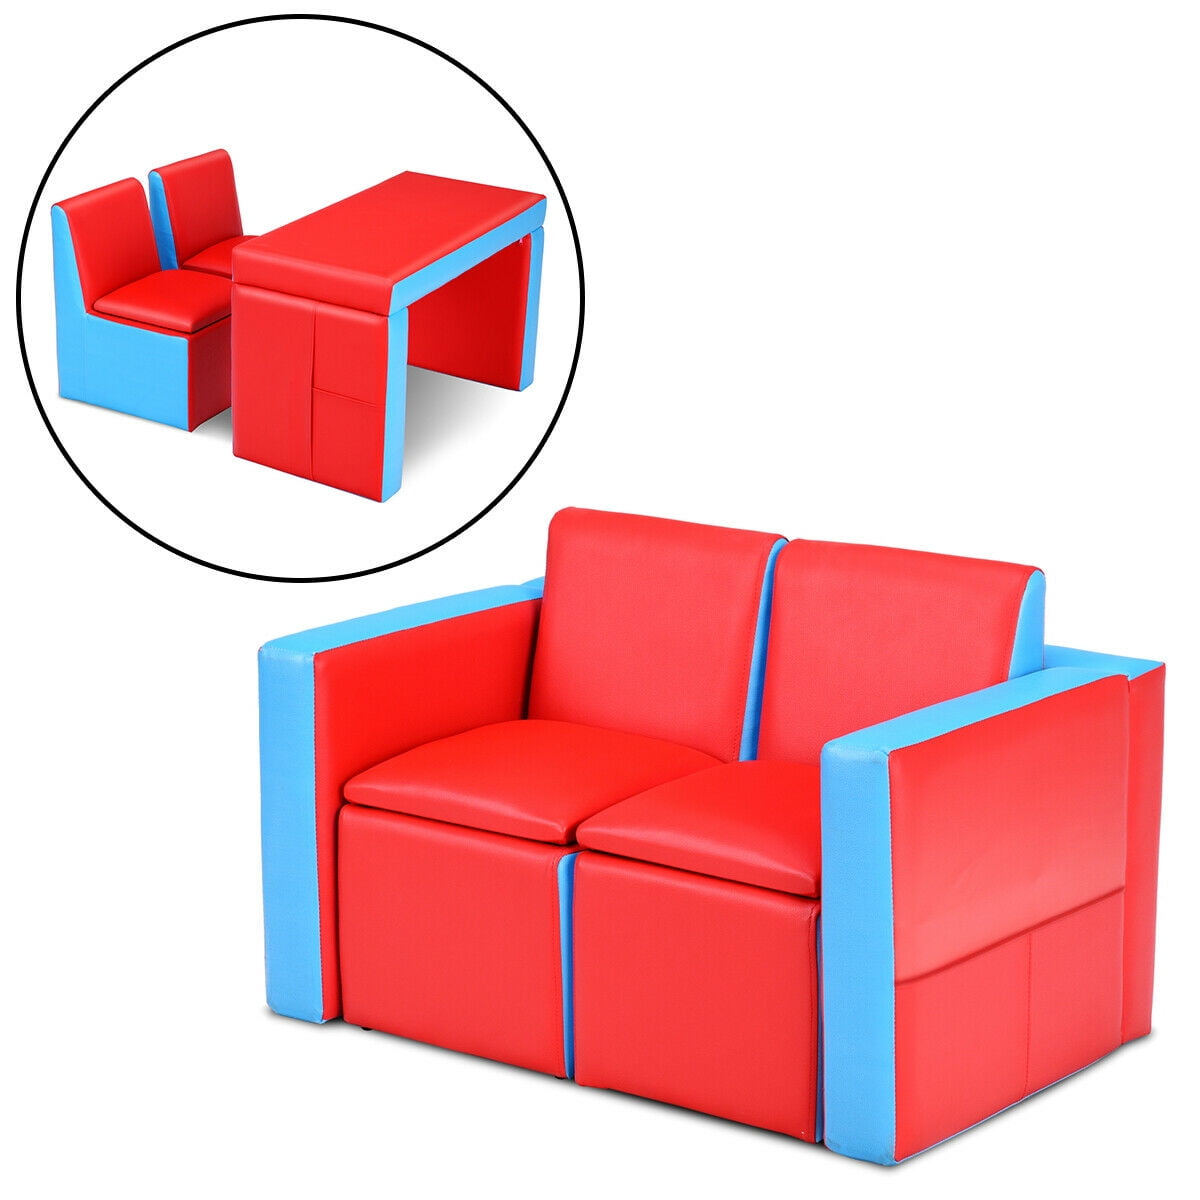 A-4 Plush Kids Sofa Chair Cartoon Sofa Kids Backrest Armchair for Playroom Living Room Bedroom